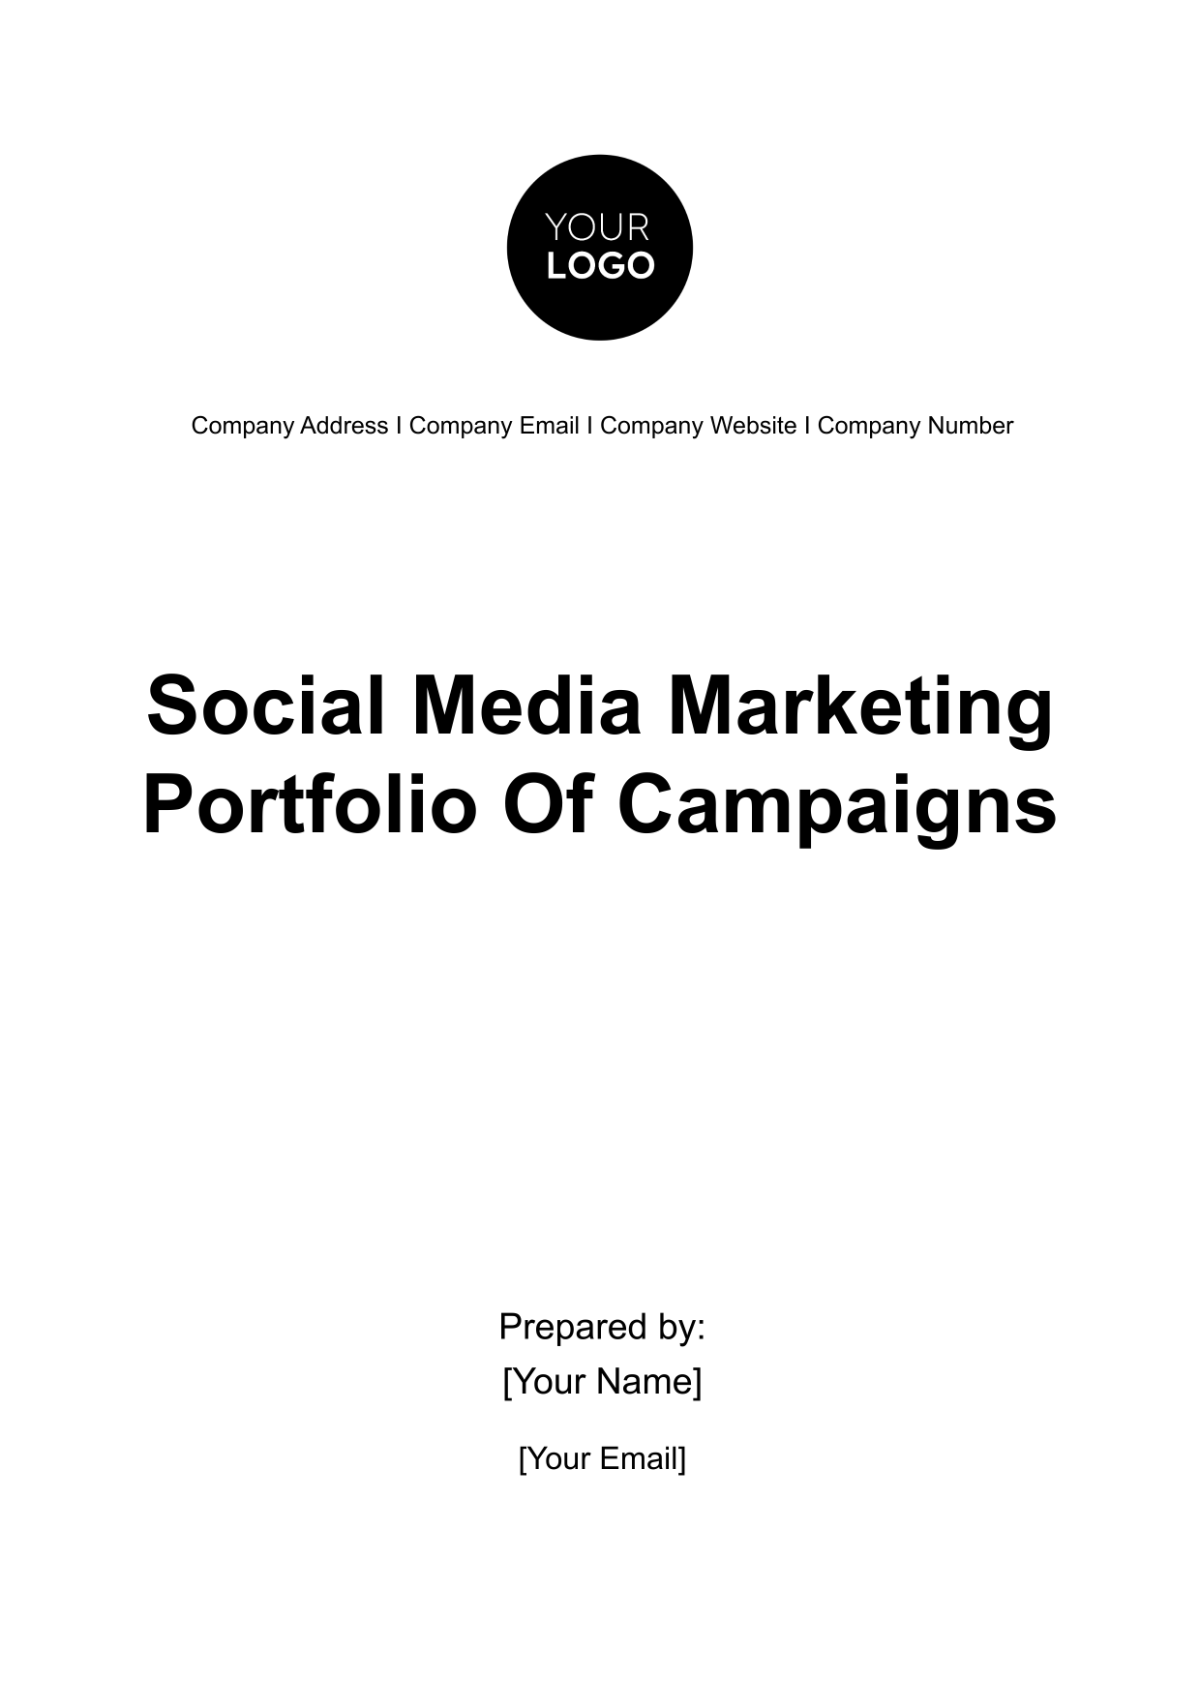 Free Social Media Marketing Portfolio of Campaigns Template